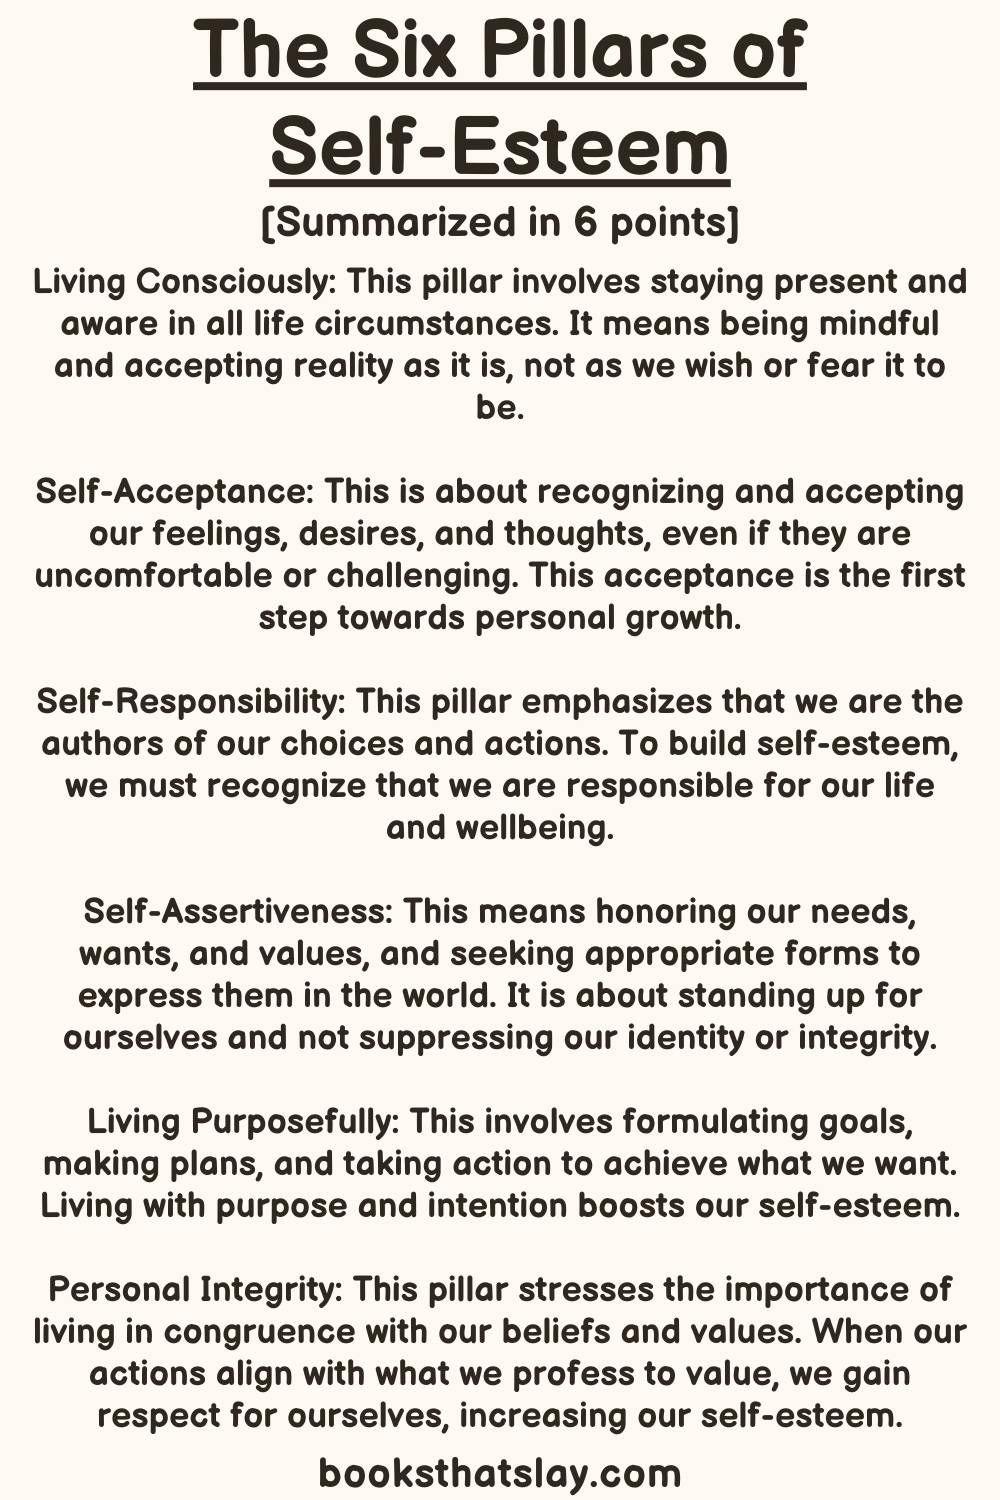 the six pillars of self-esteem summary